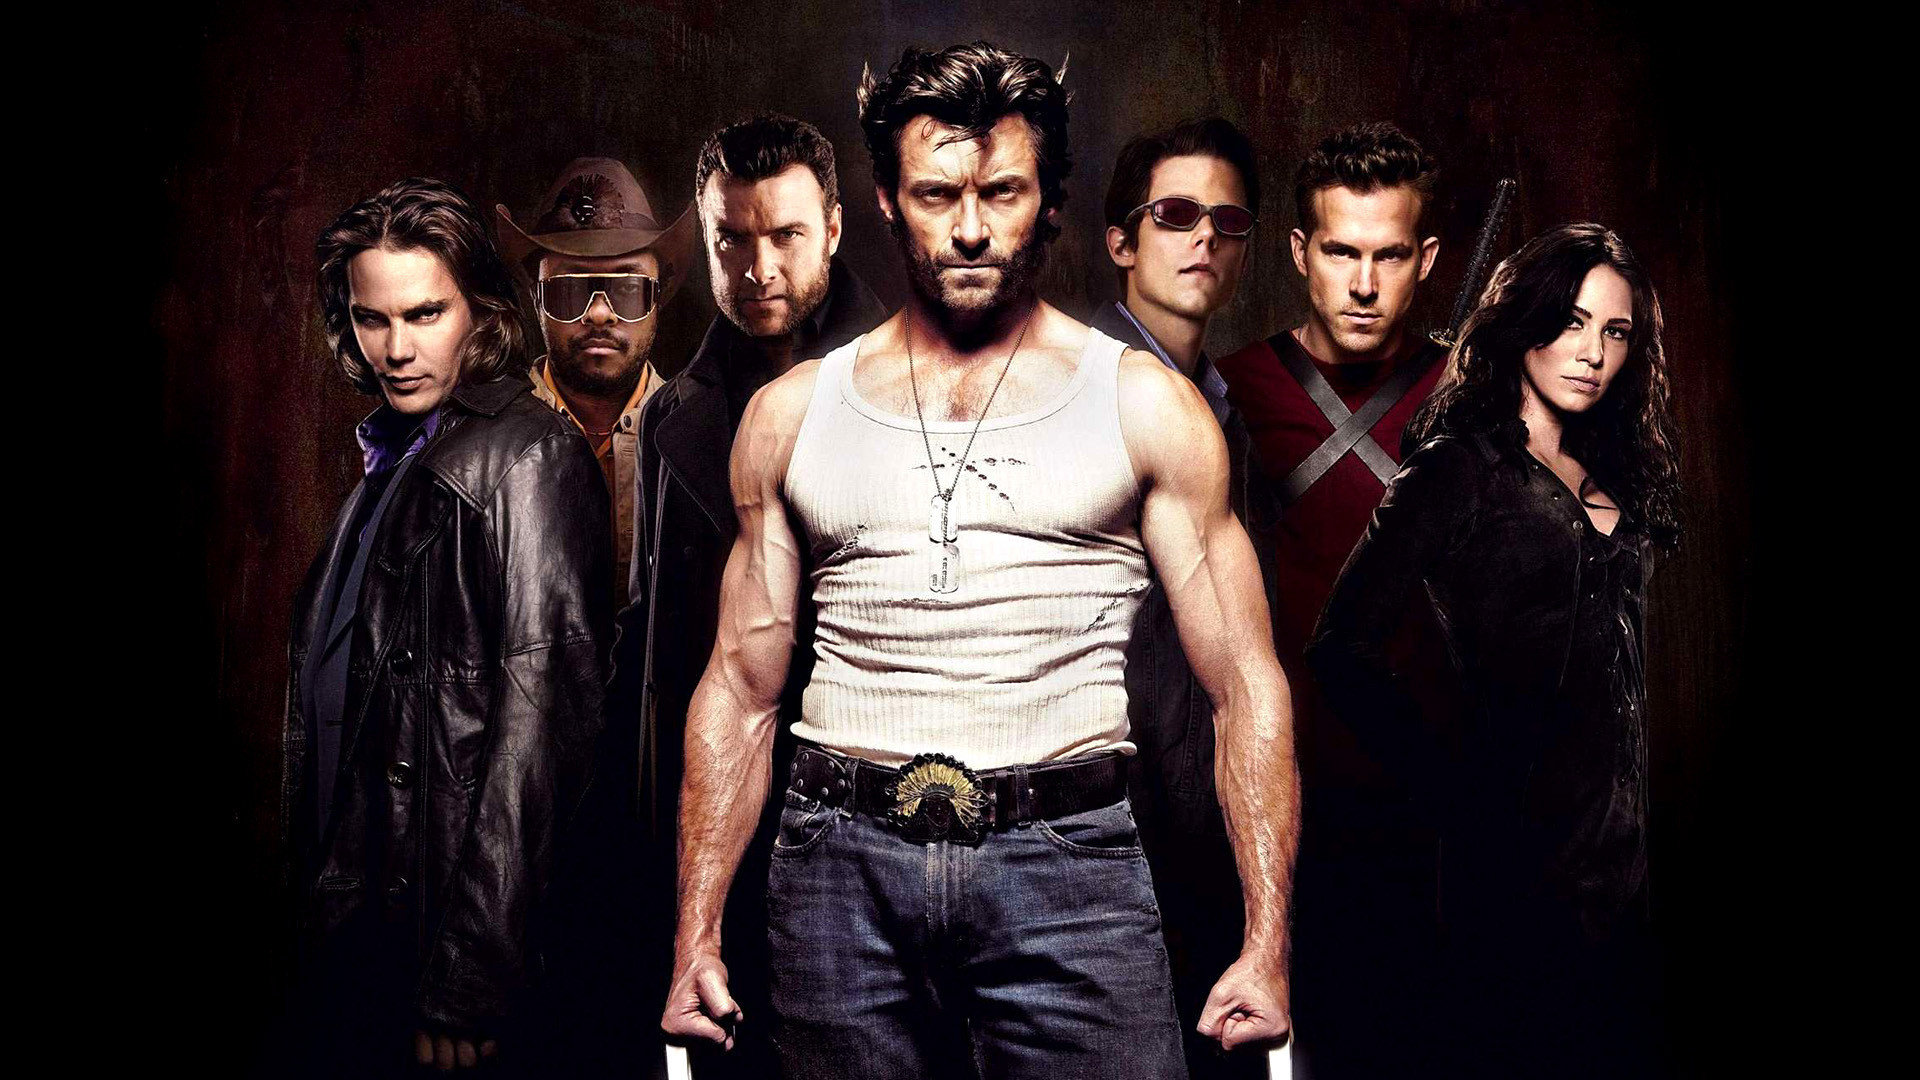 Download hd 1080p X-Men Origins: Wolverine PC background ID:165789 for free